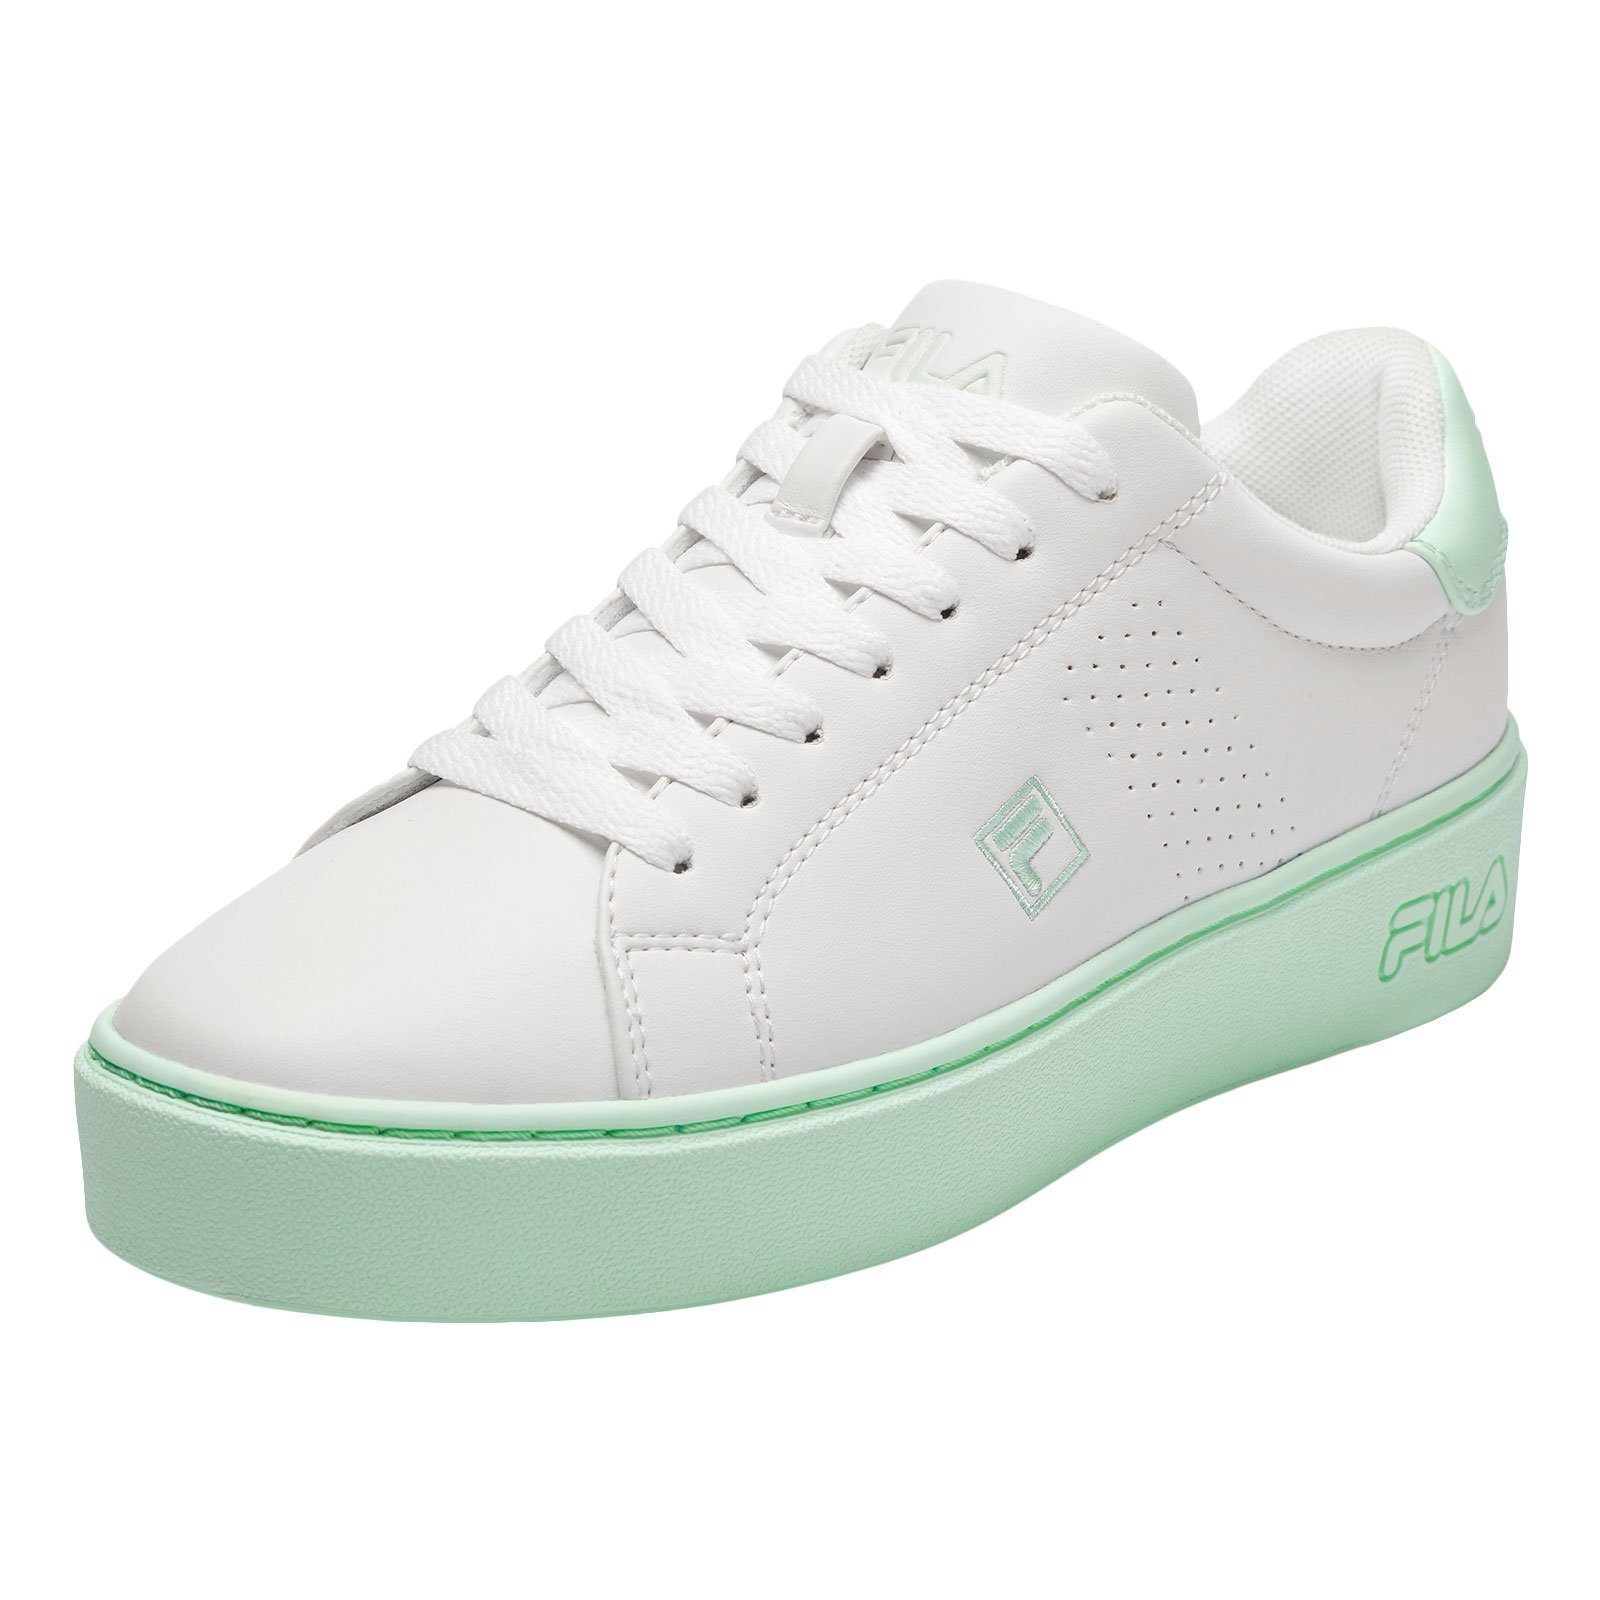 Fila Damen Akzenten zarten / 94W Pastellfarben mit und Sneaker Plateausohle white in bay